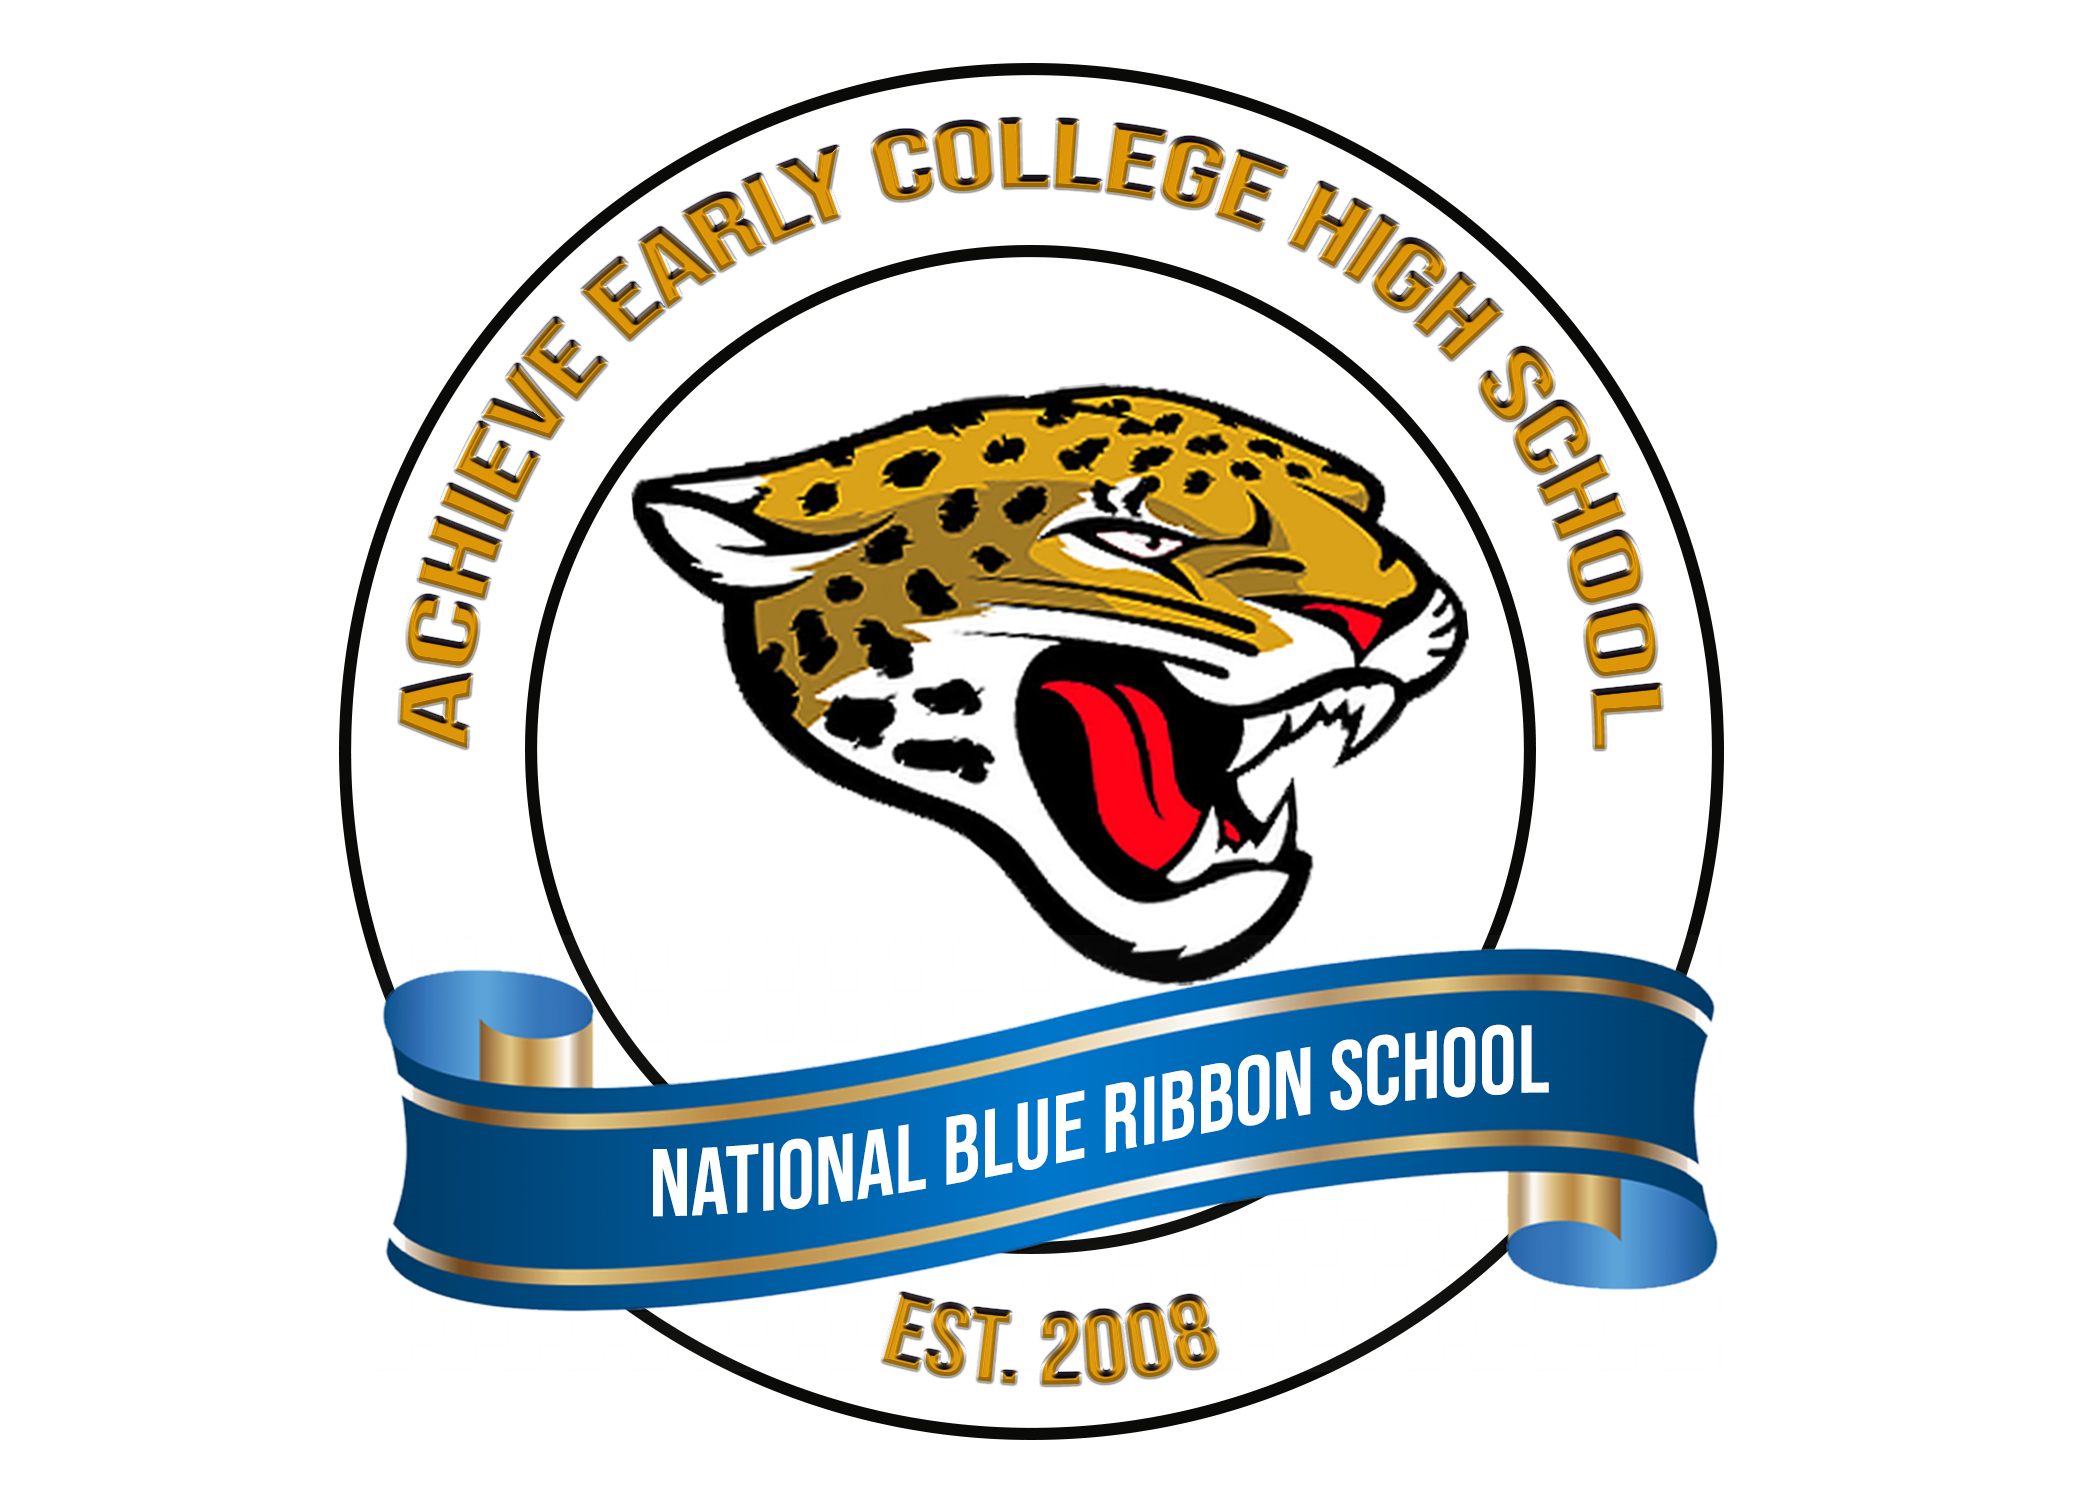 Achieve ECHS Late Schedule Pick UP | Achieve Early College High School